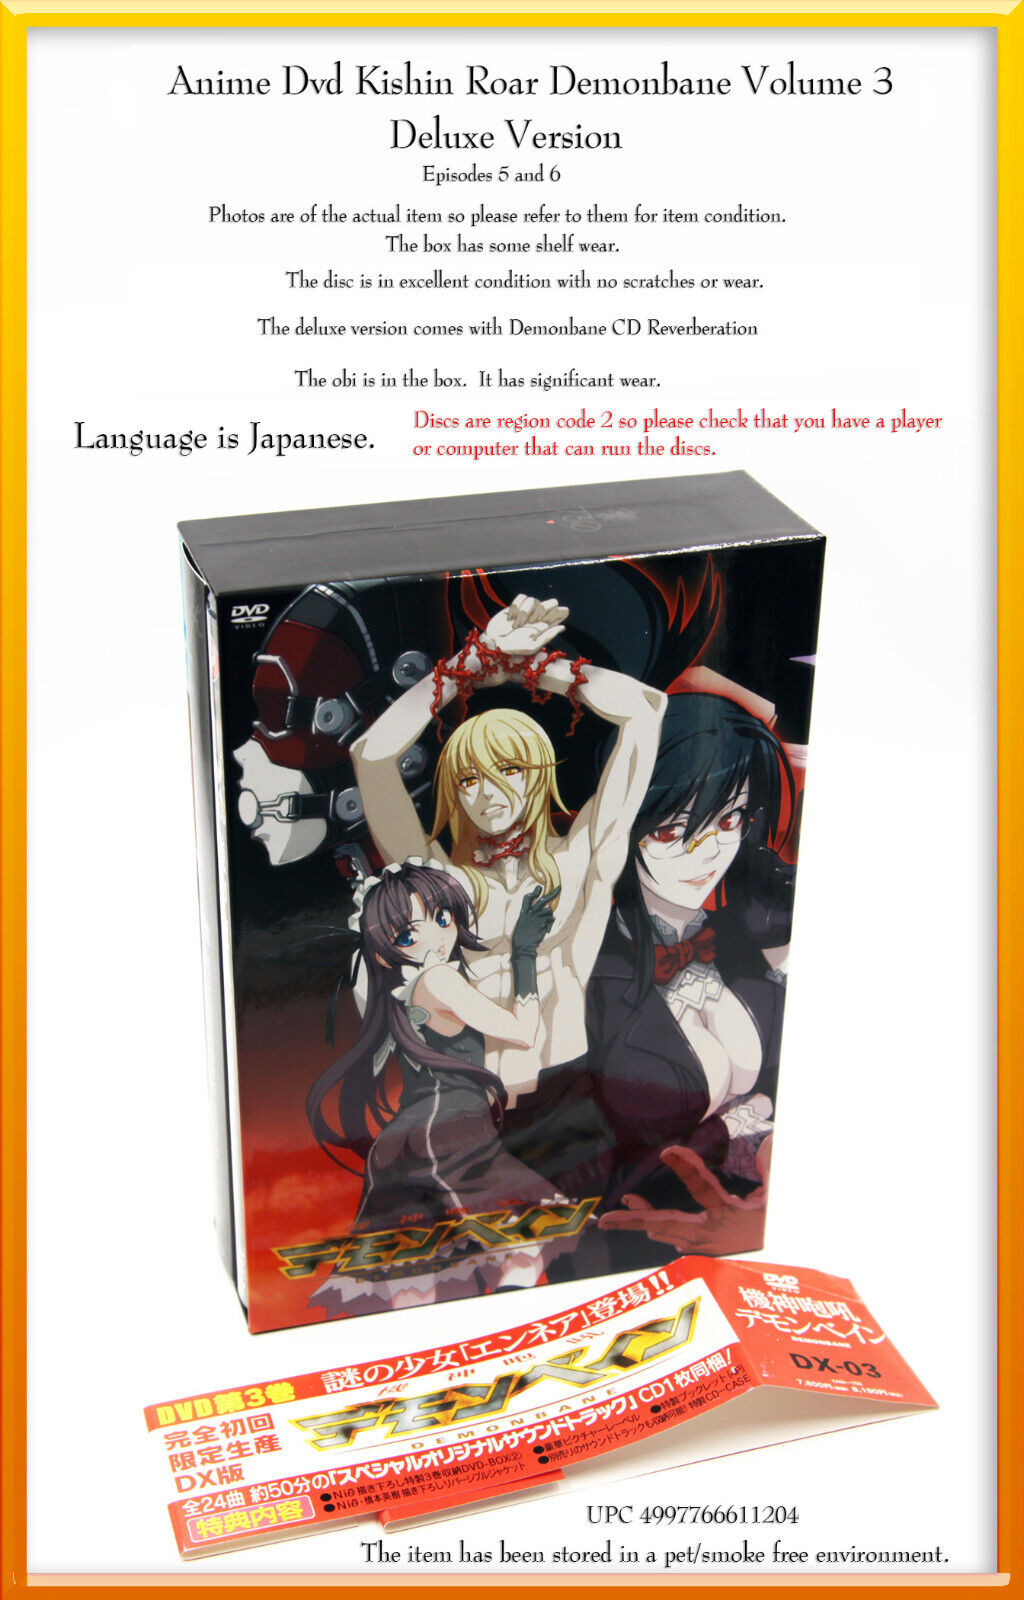 Anime DVD - Kishin Houkou Demonbane Deluxe Edition Volume 3 - With Obi and OST